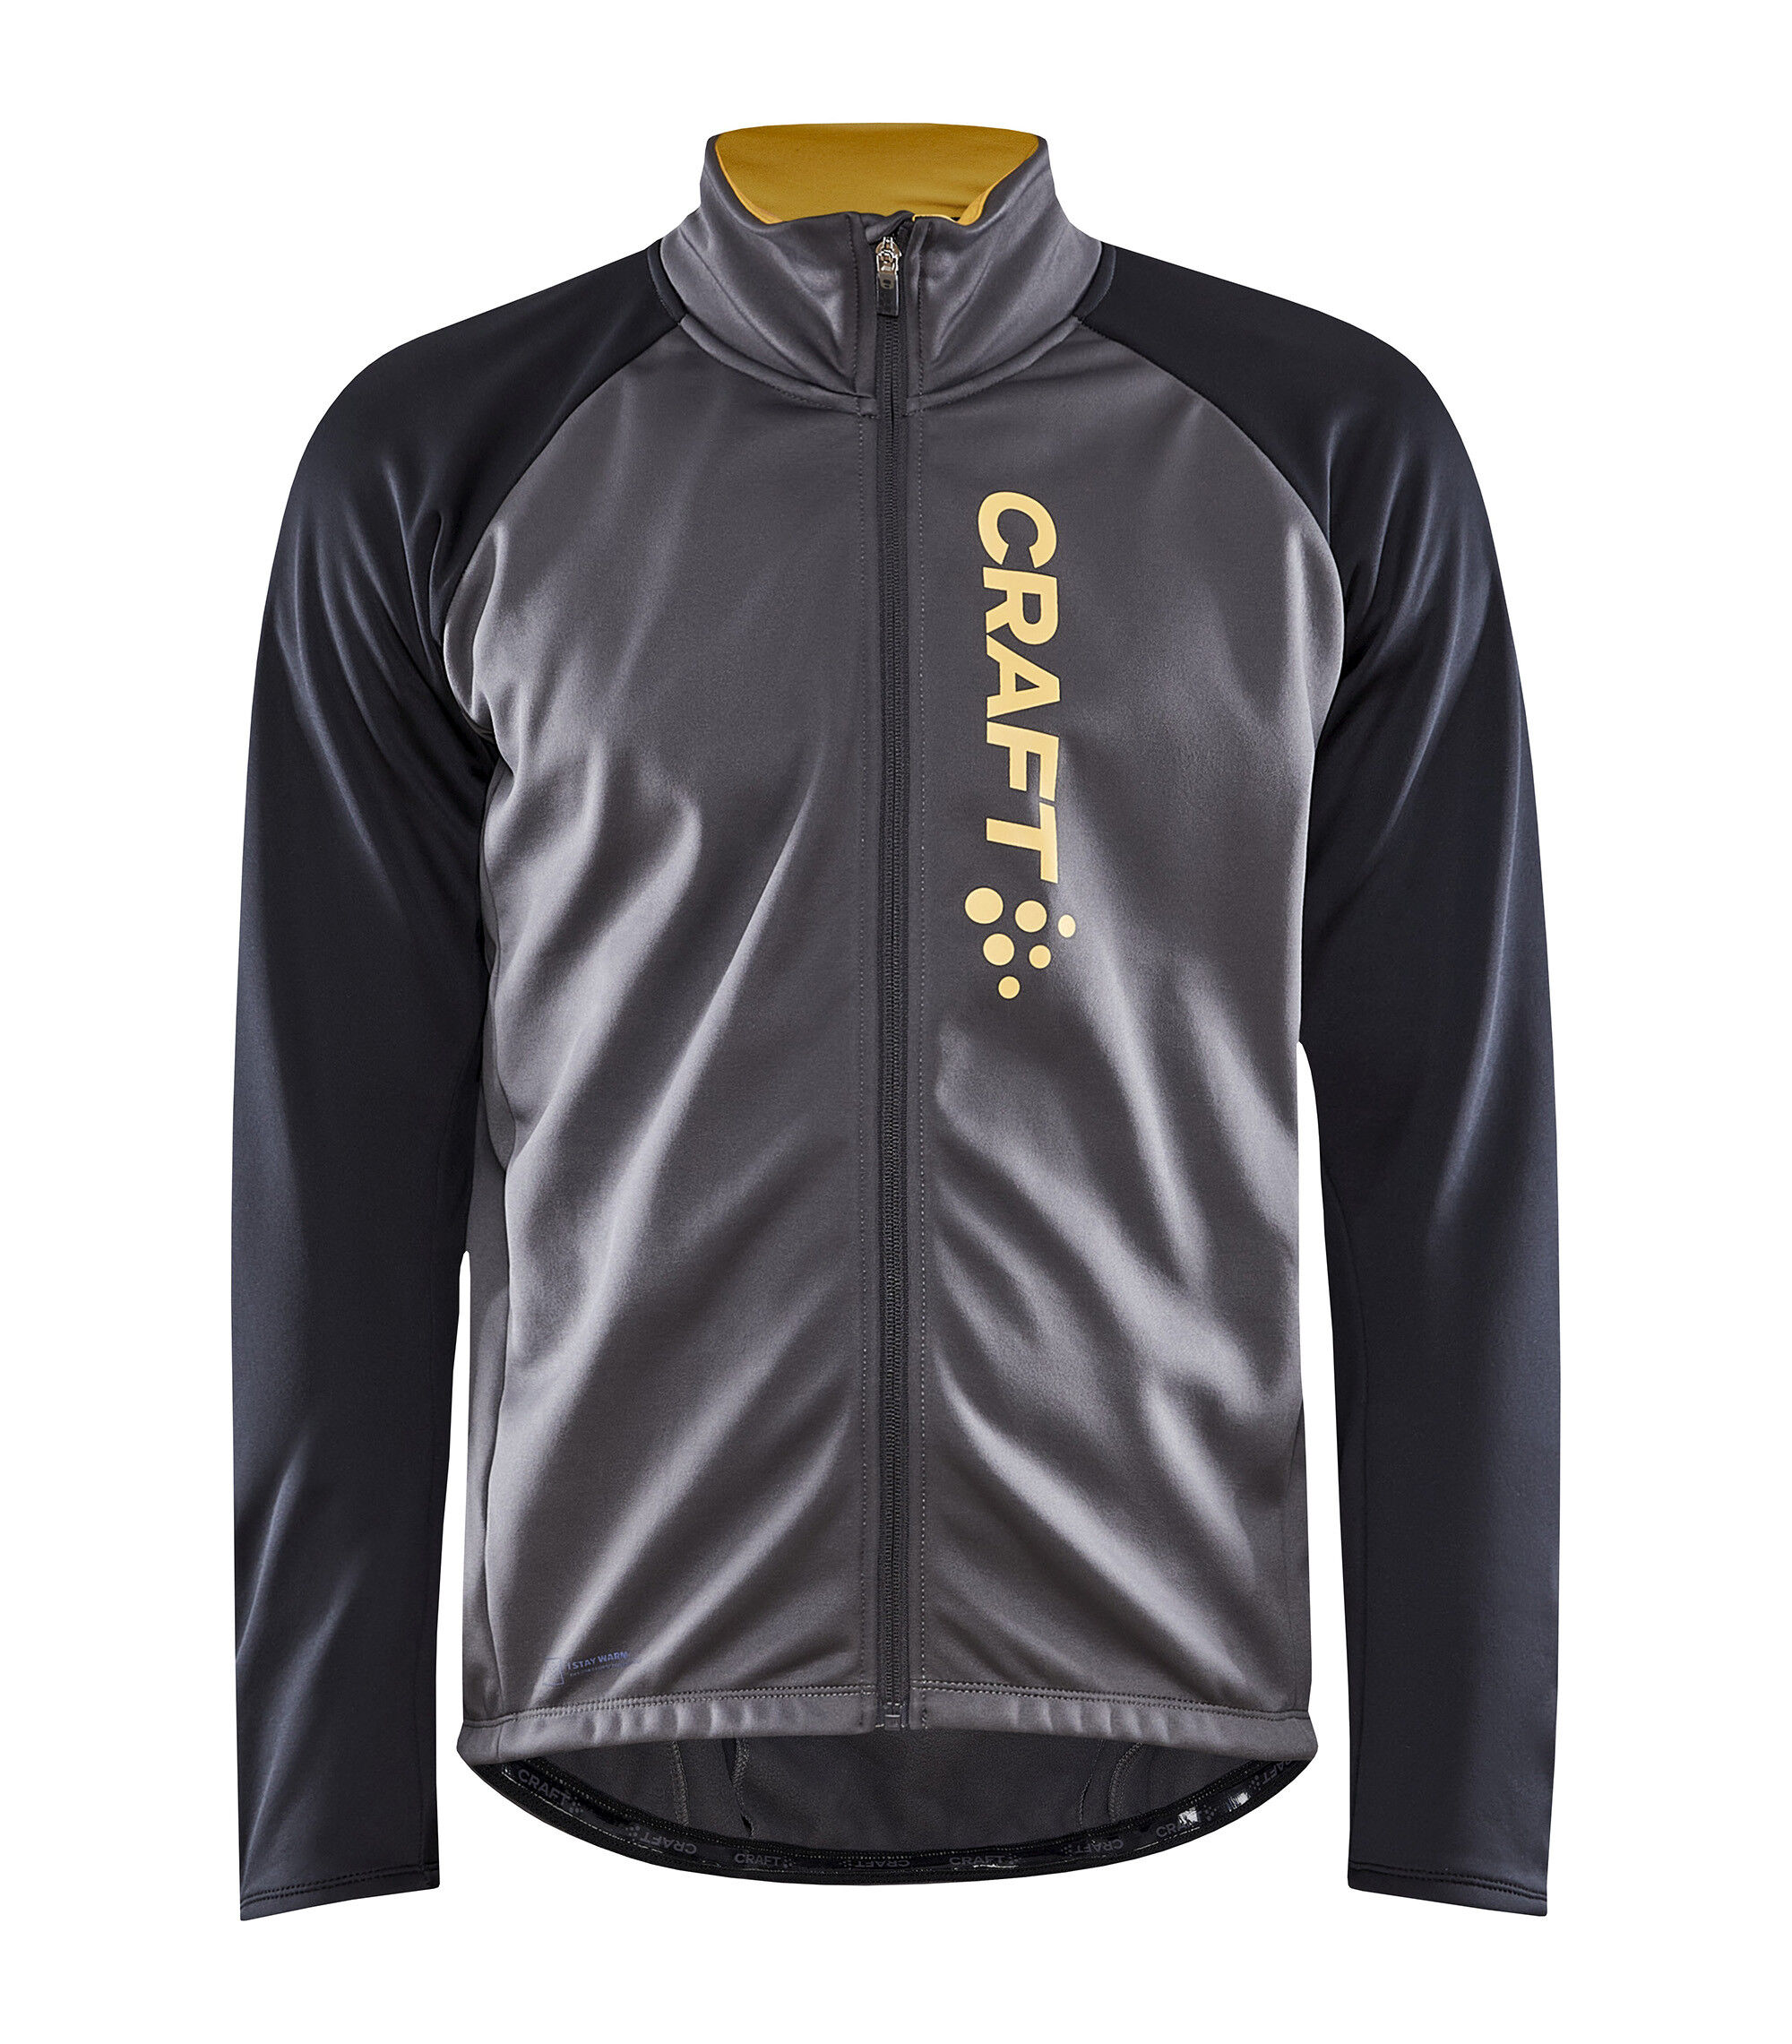 Craft Core Bike Subz Jacket - Cycling jacket - Men's